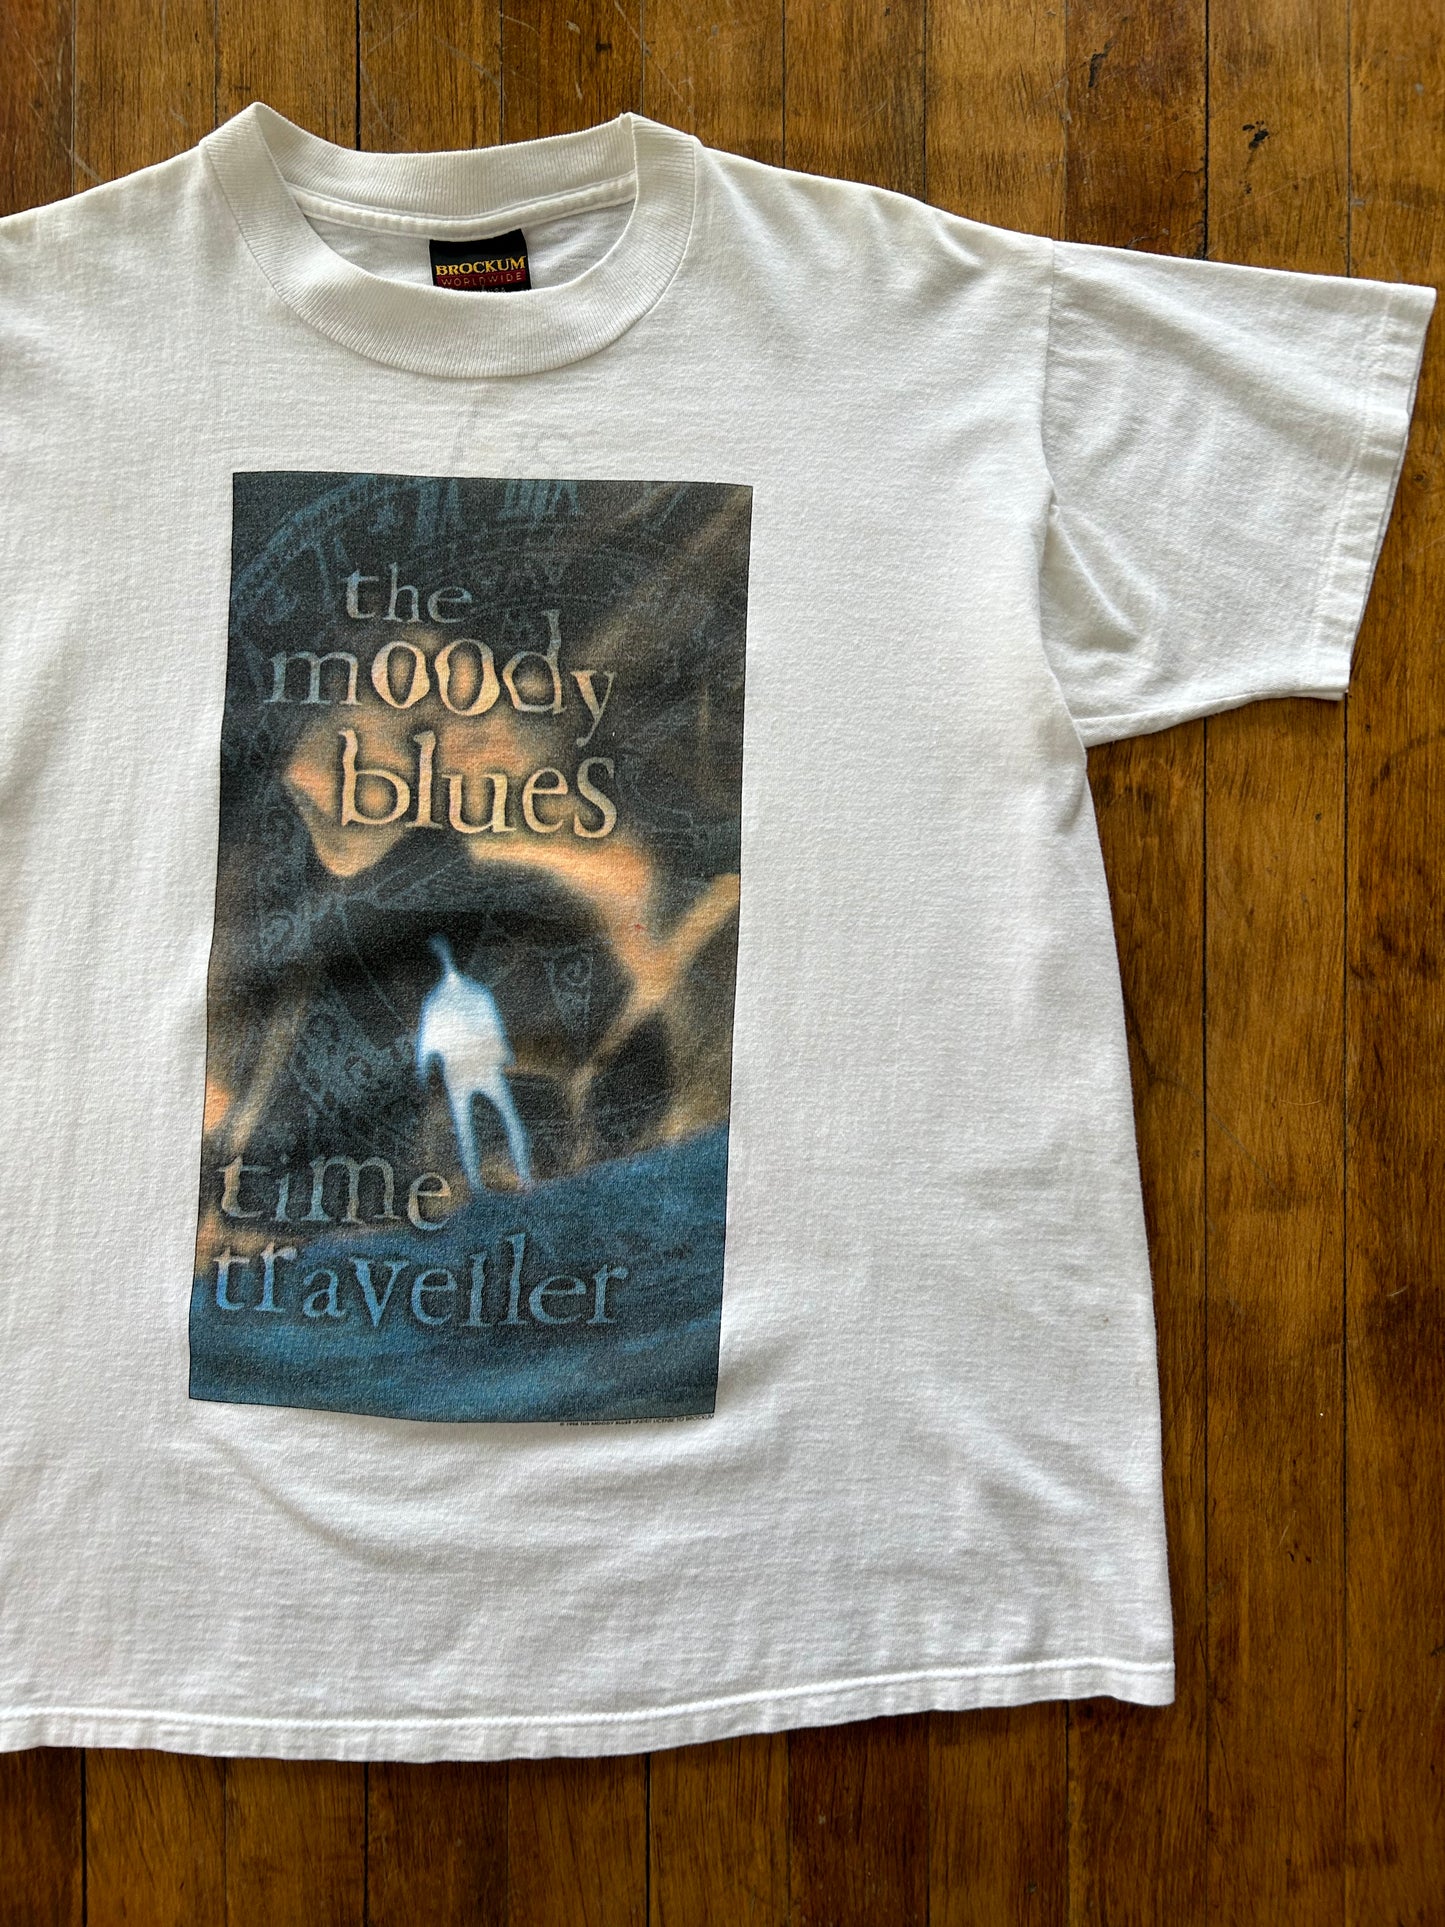 1995 The Moody Blues Time Traveler Tour T-Shirt. Size Medium